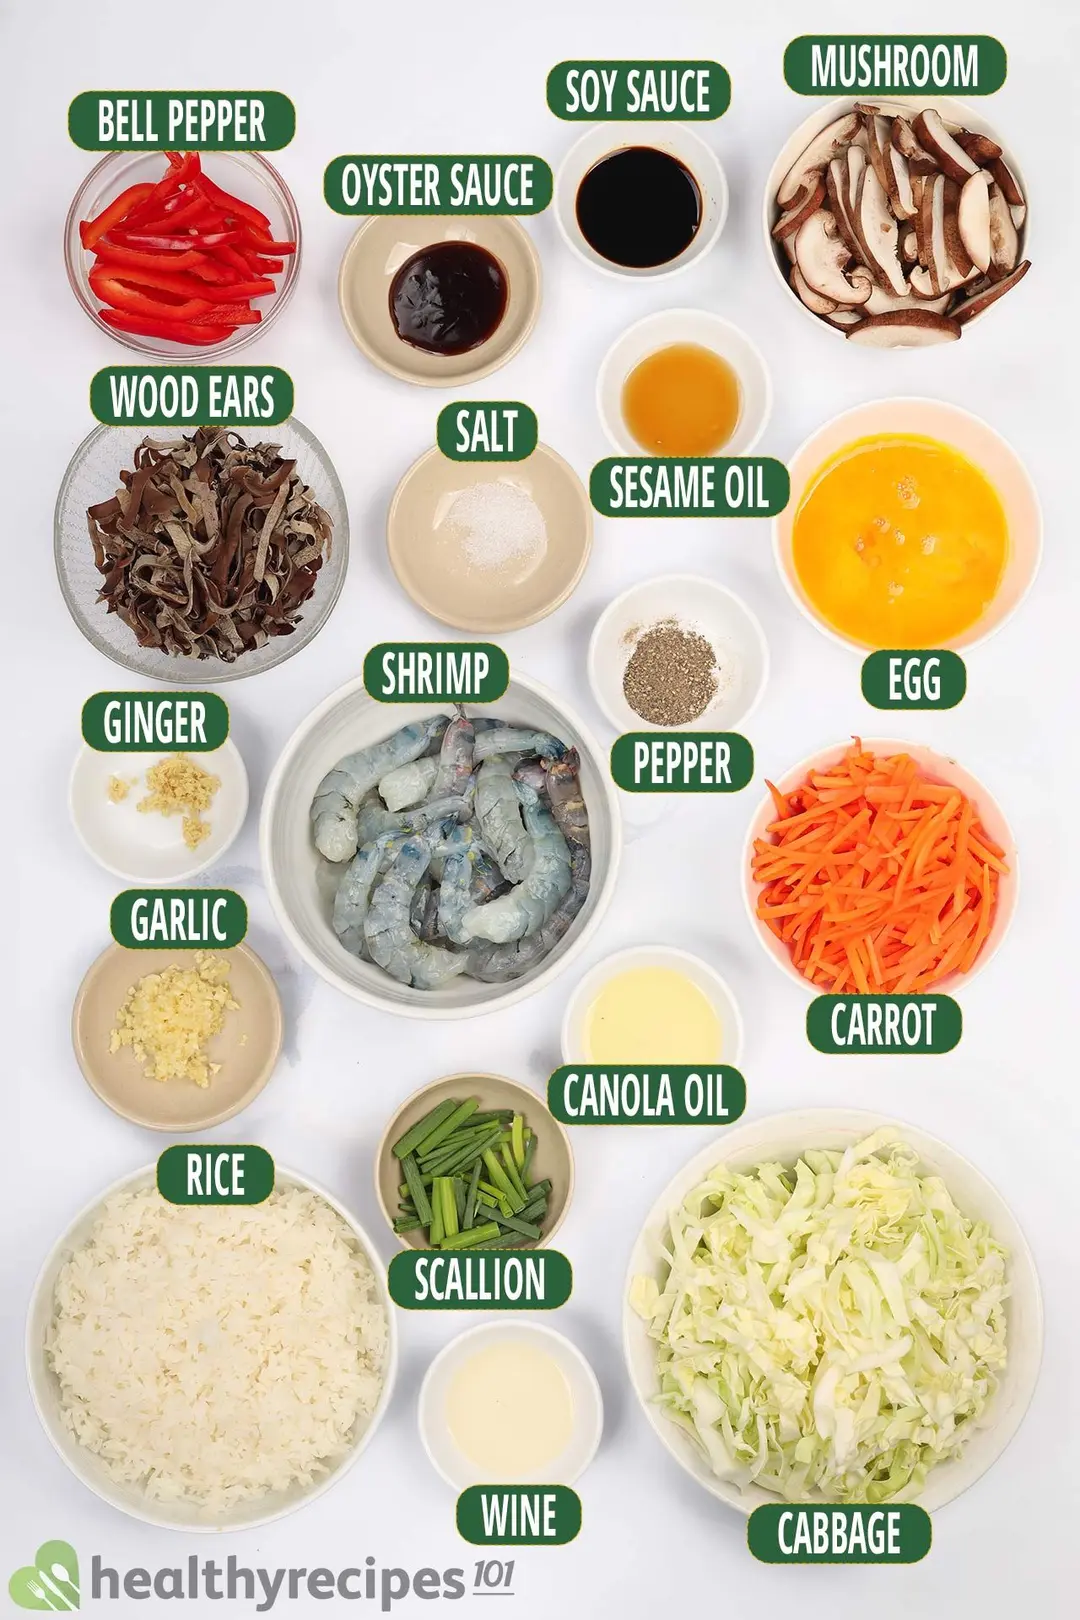 Colorful ingredients of moo shu shrimp: shredded cabbage, carrots, wood ears, mushrooms, shrimp, rice, and seasonings